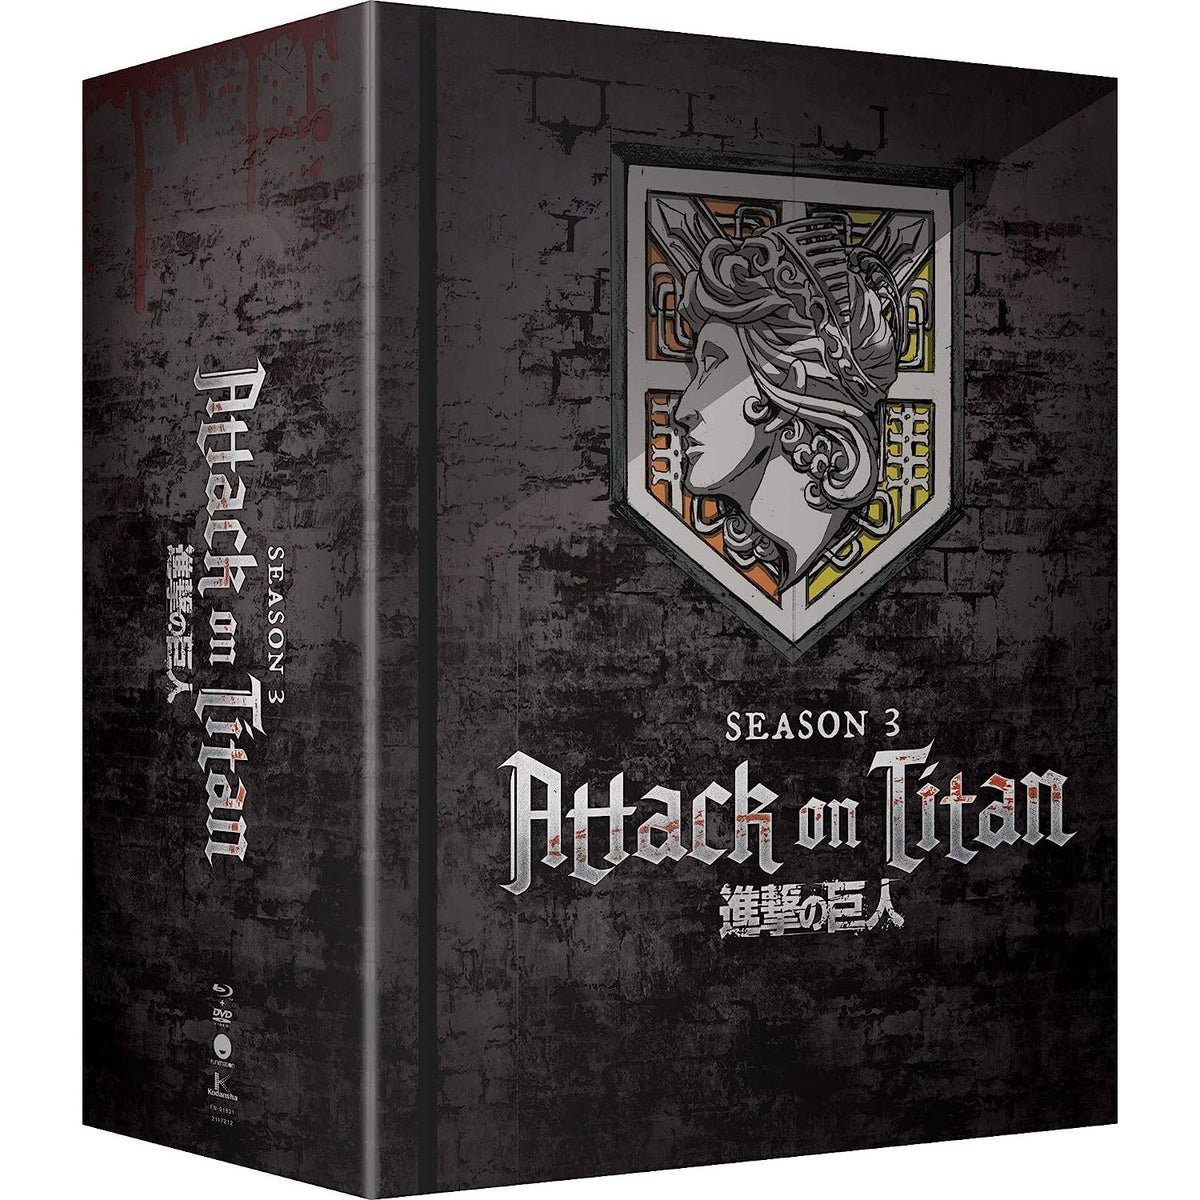 Attack on Titan: Final Season - Part 2 - Limited Edition Blu-ray + DVD